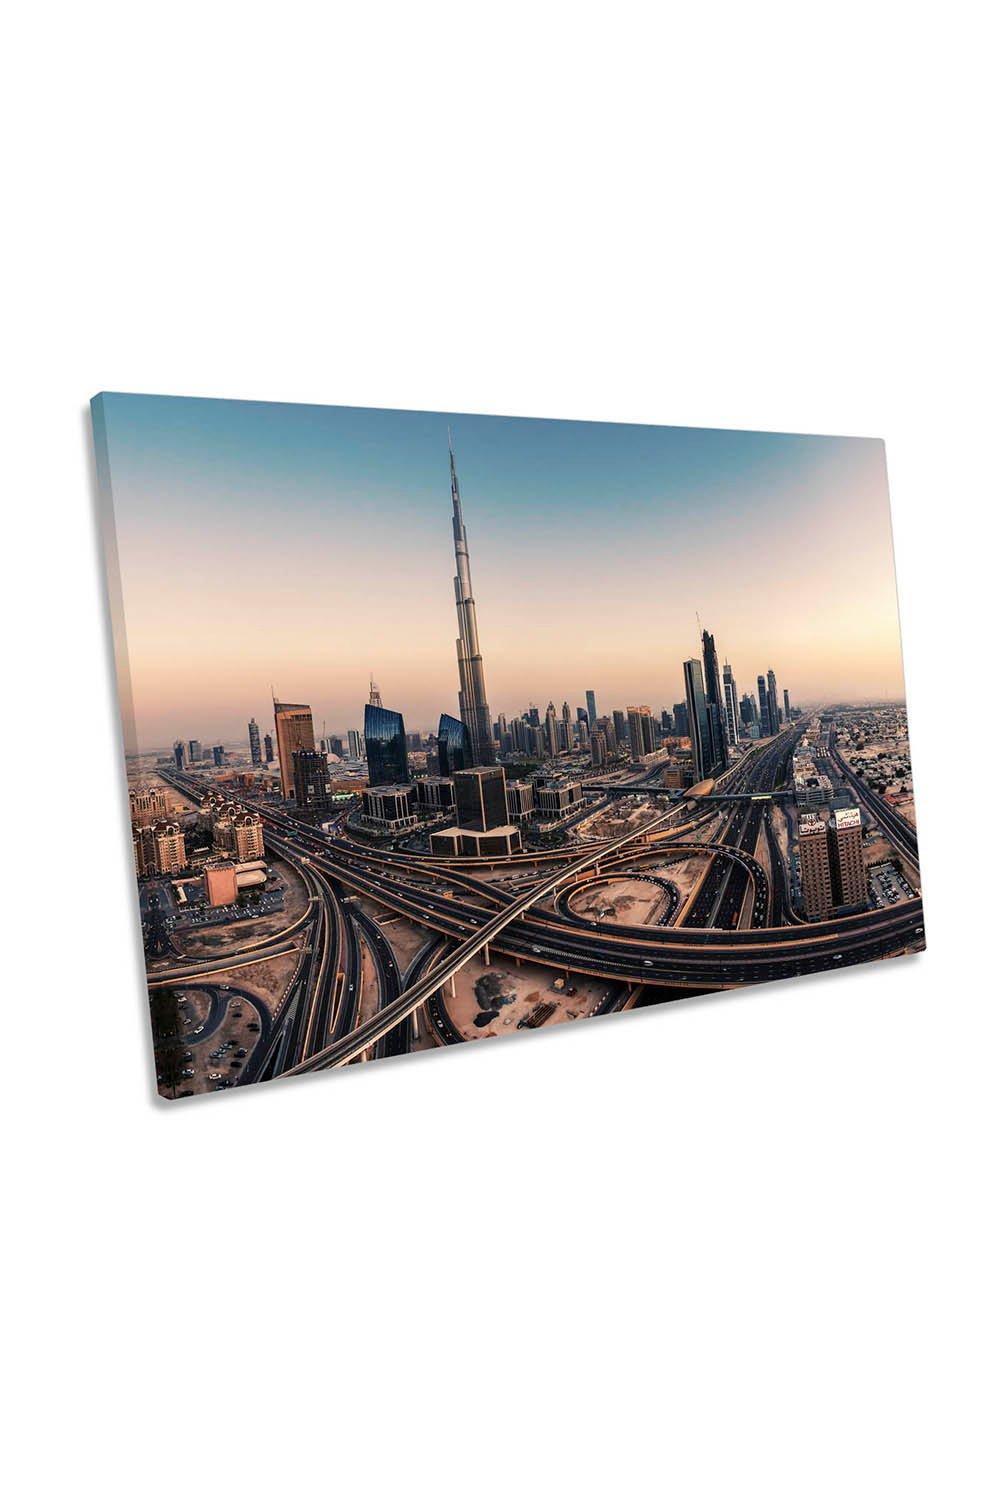 Dubai Skyline City Sunset Canvas Wall Art Picture Print